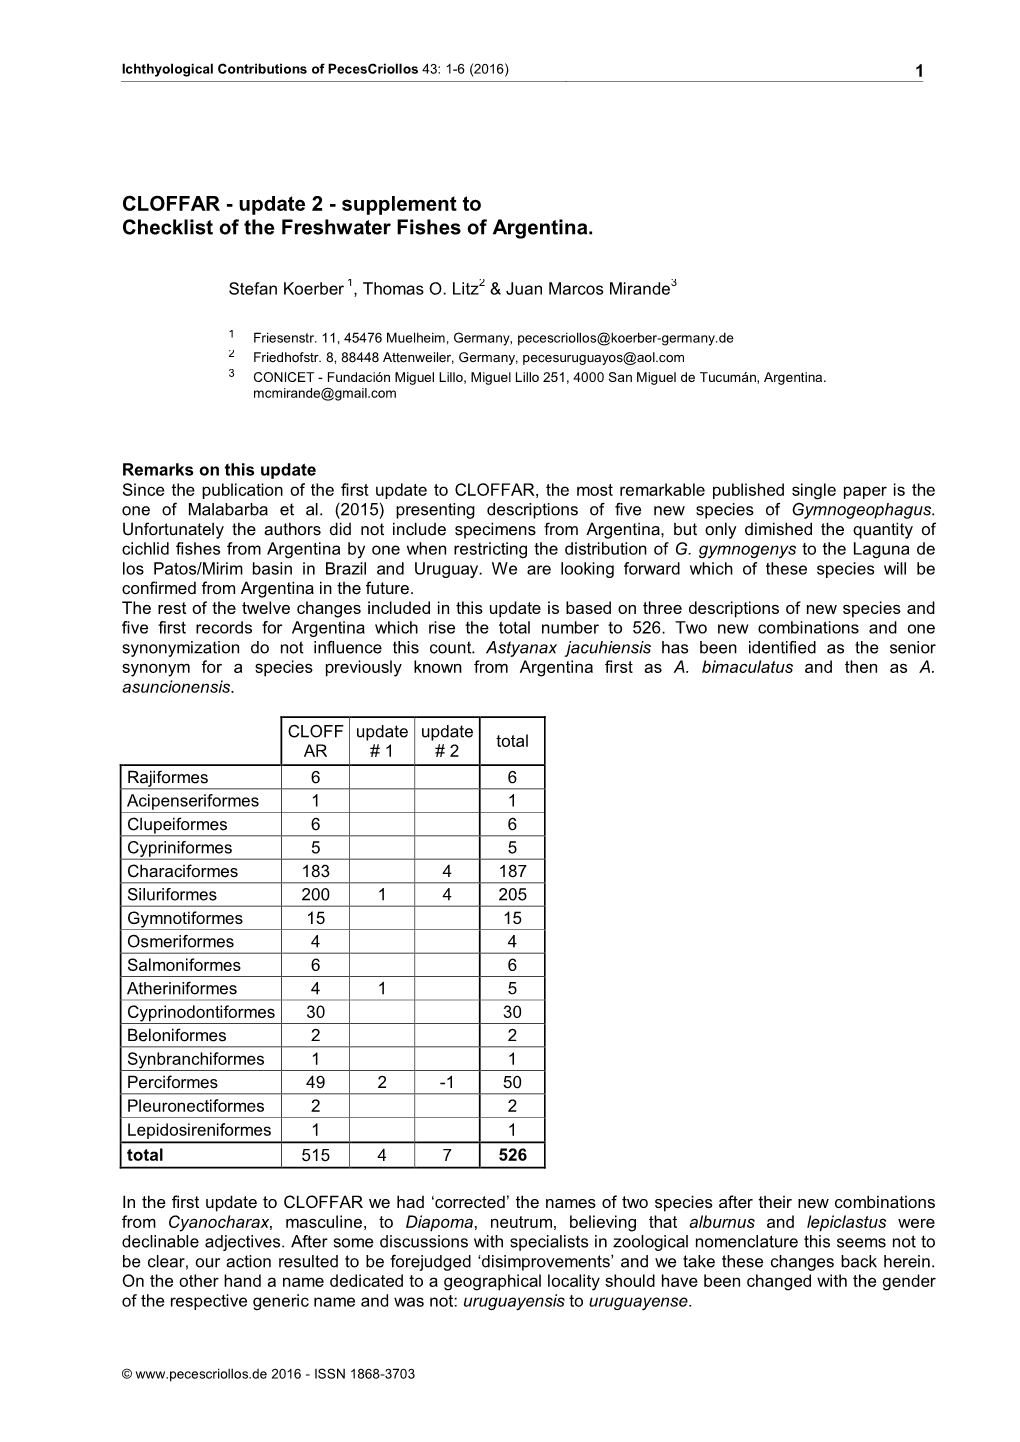 Remarks on the Type Locality of Corydoras Longipinnis KNAACK, 2007